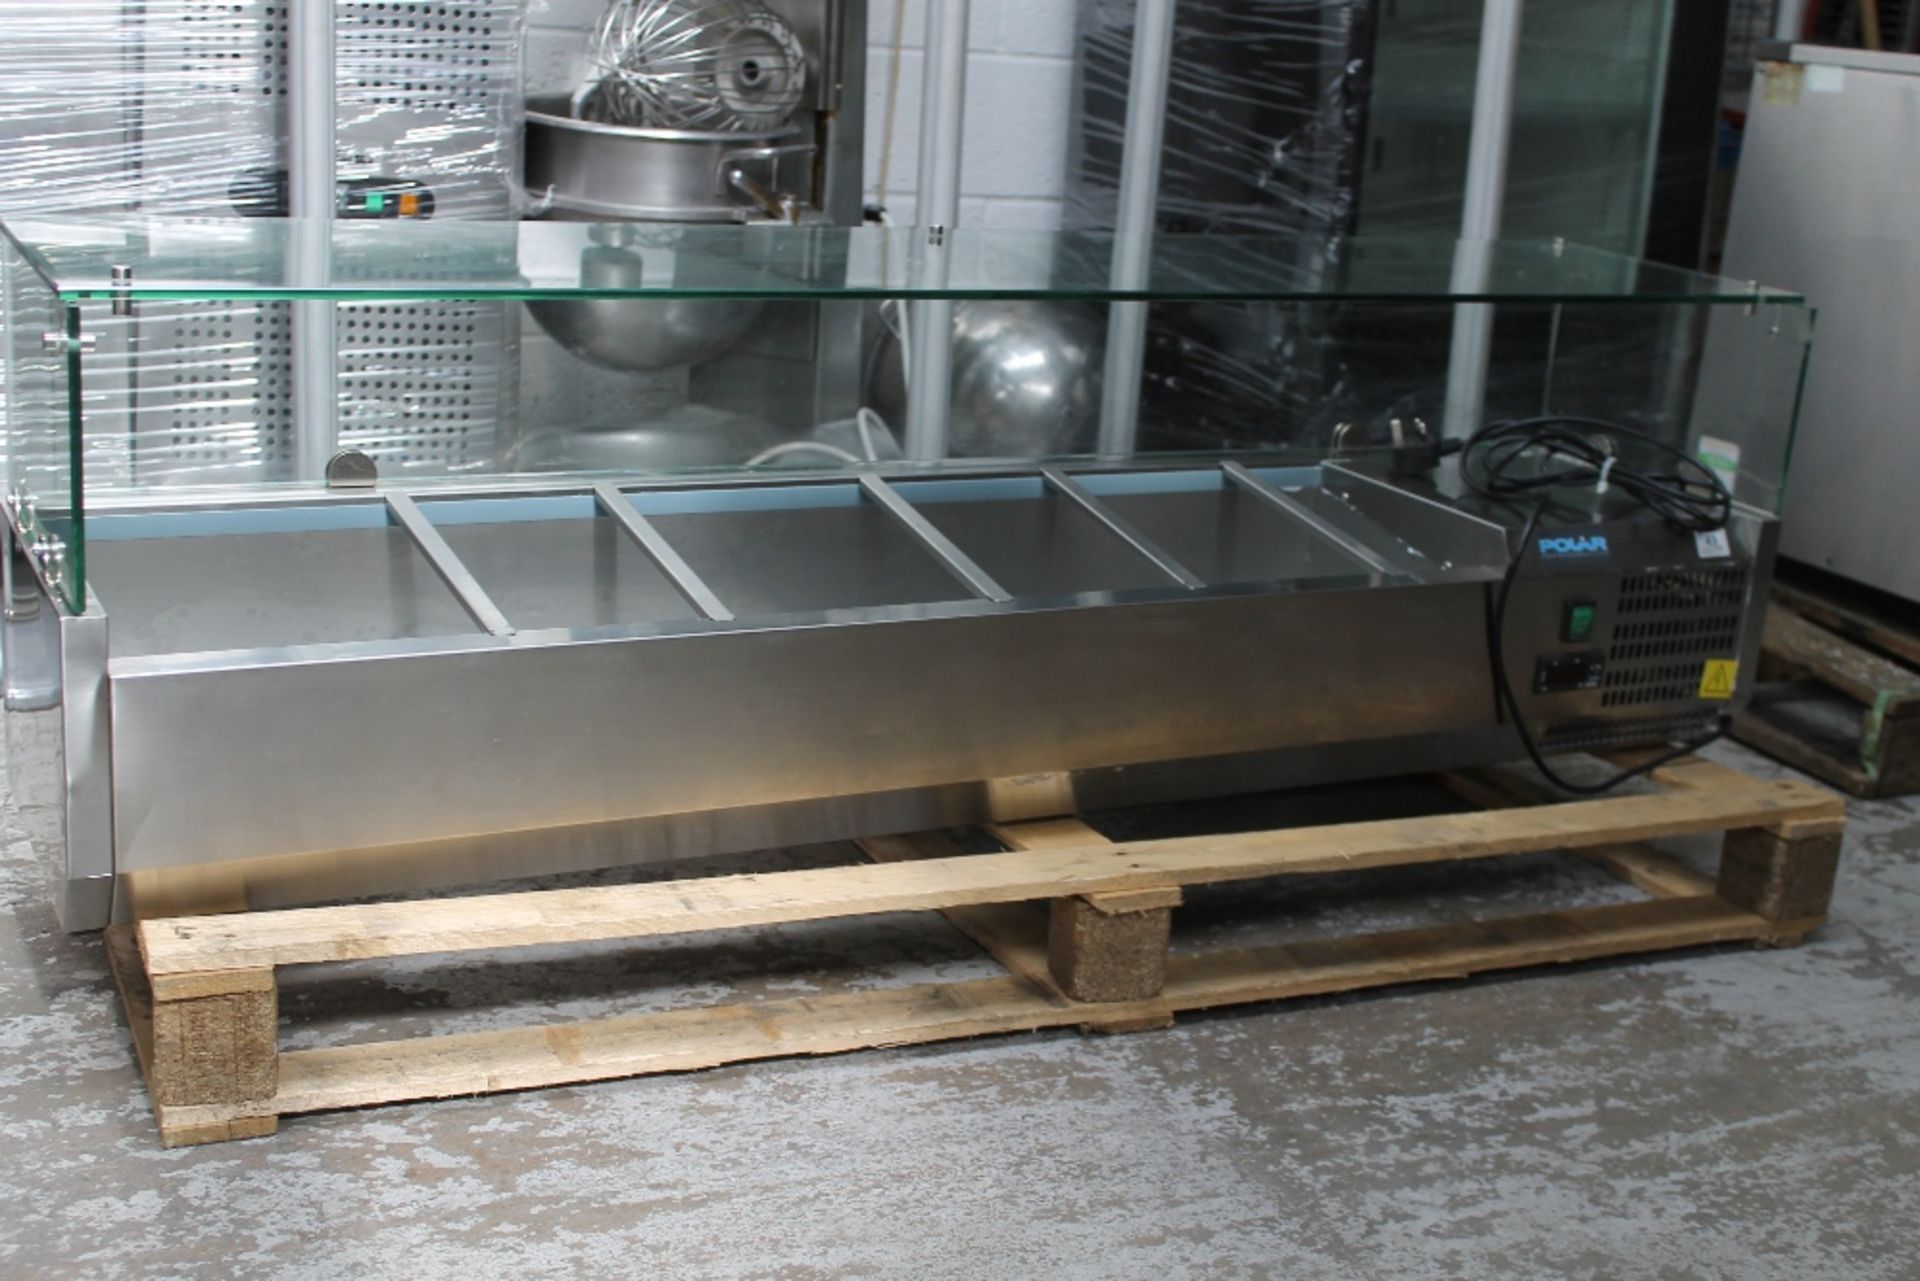 Polar Refrigerated Saladette – 1-ph – Tested – NO VAT Model G609 – 160x – serial no: G609126762 – - Image 2 of 2